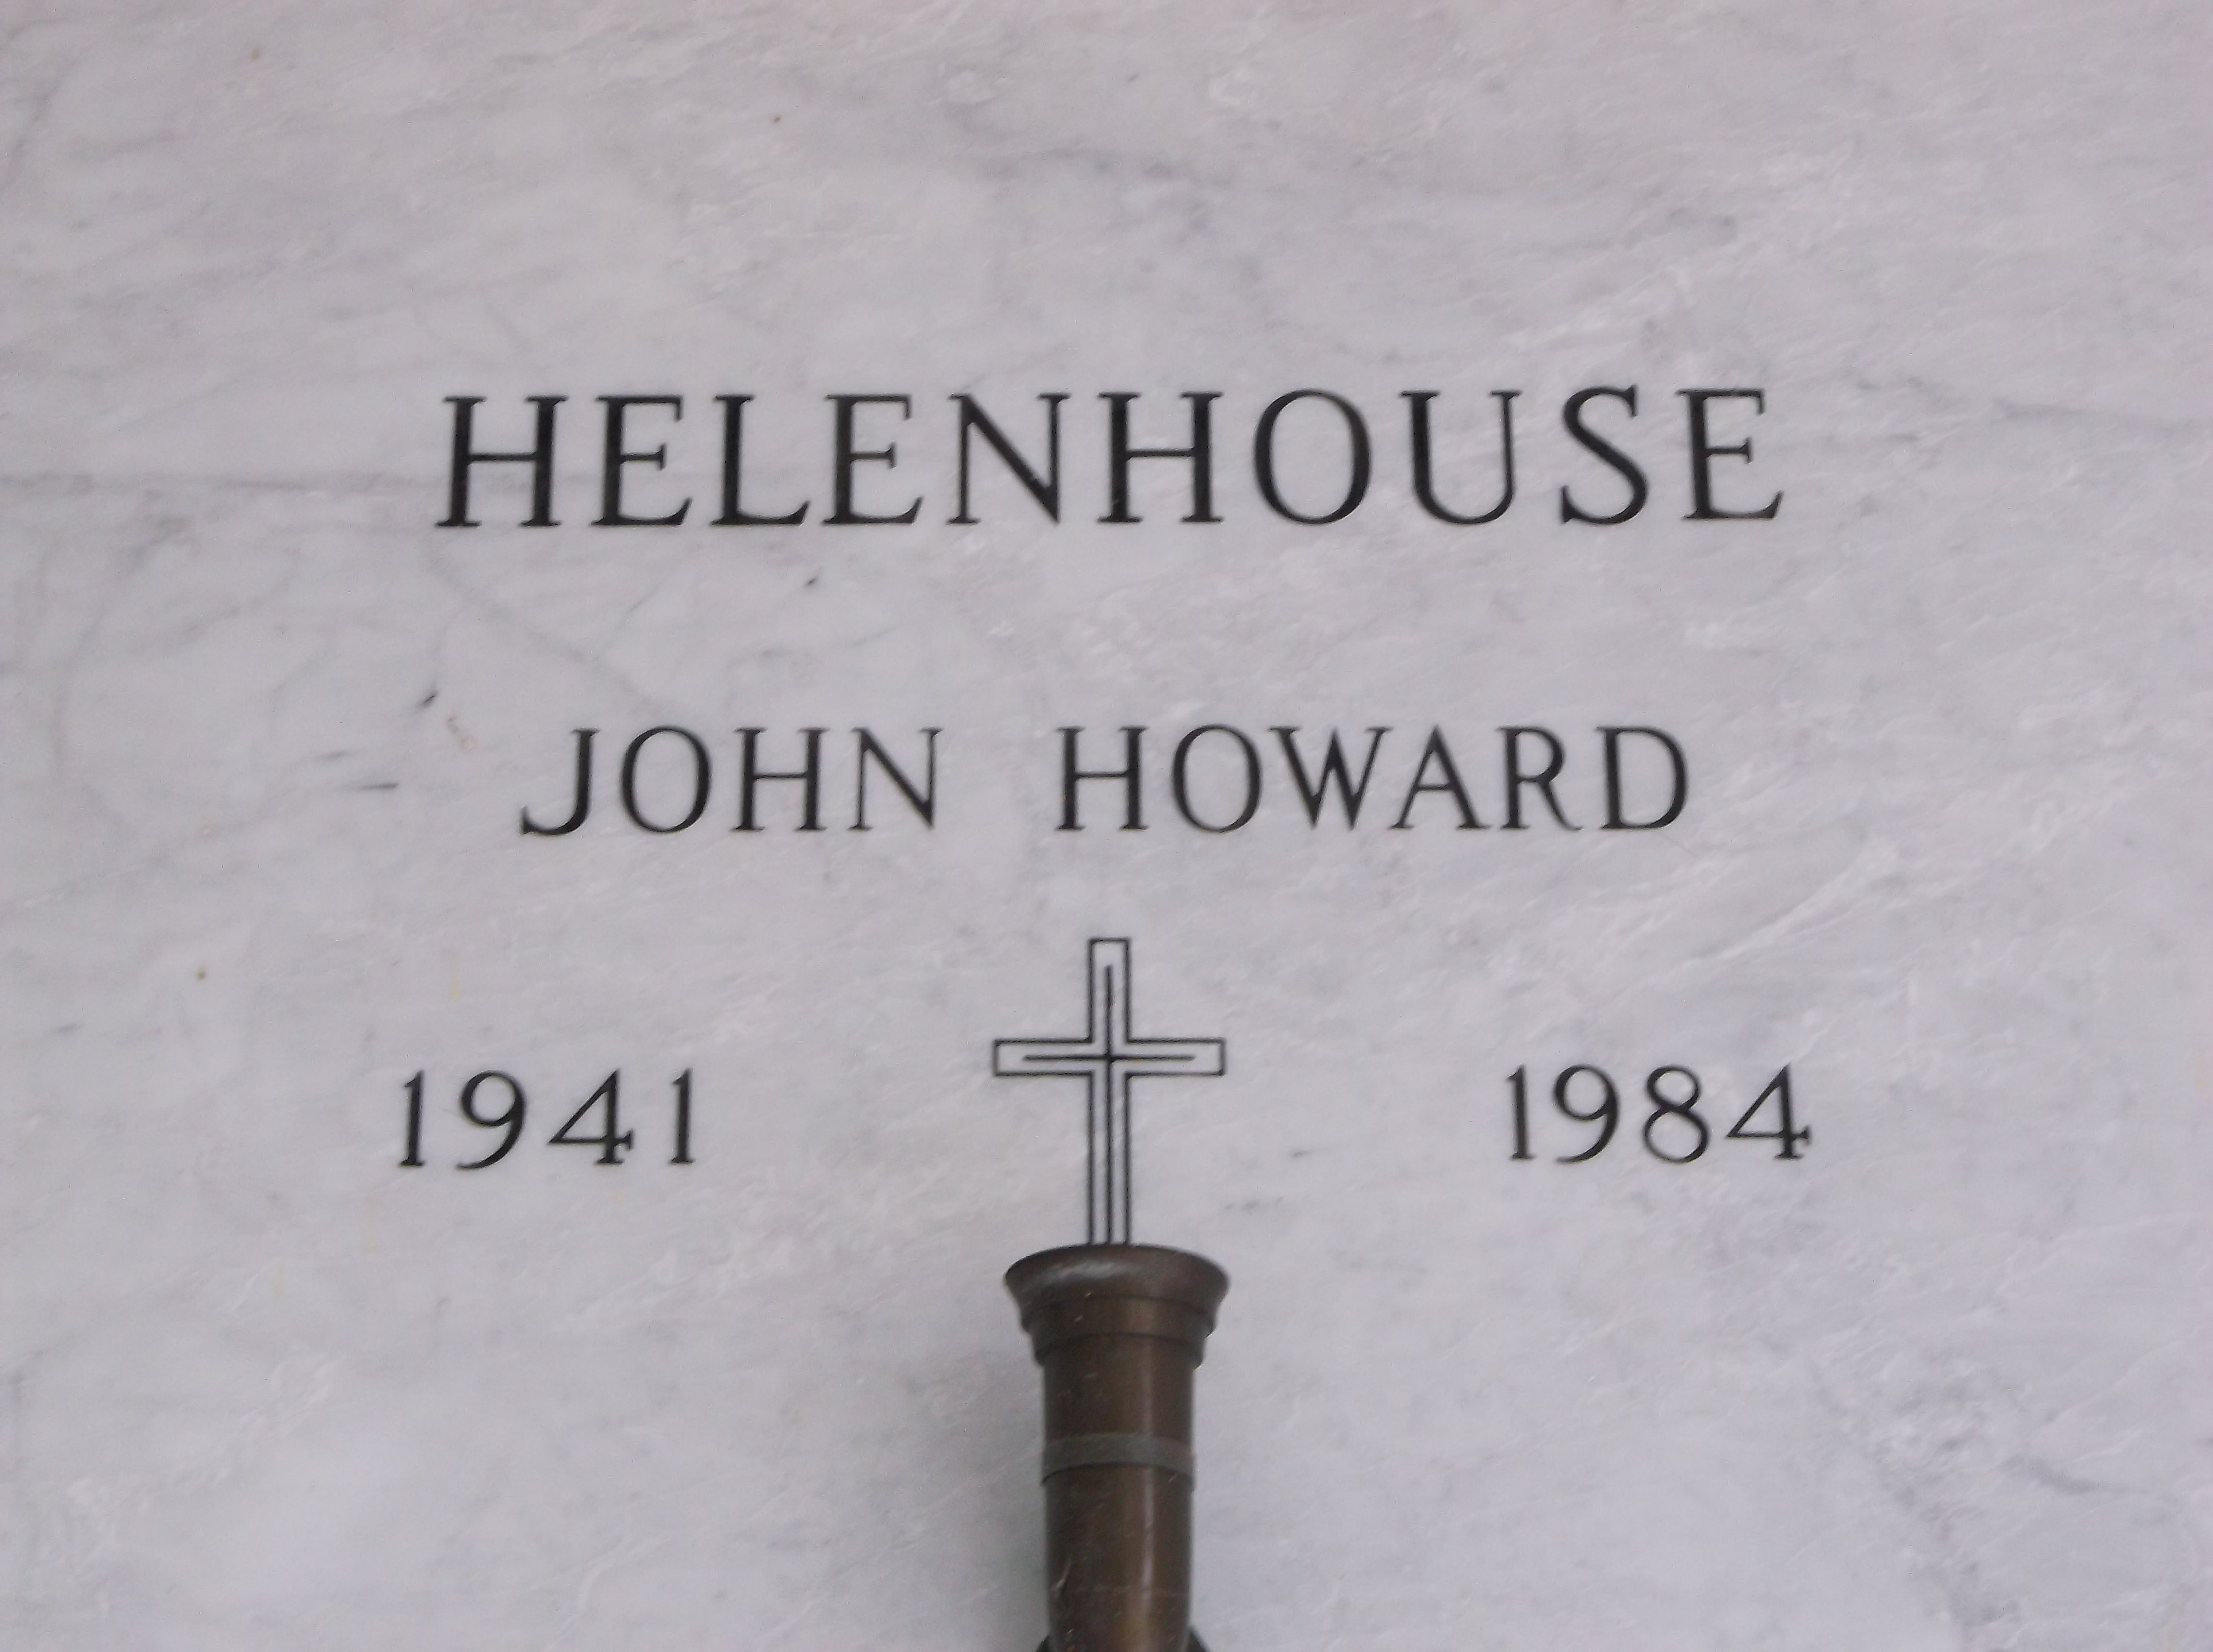 John Howard Helenhouse